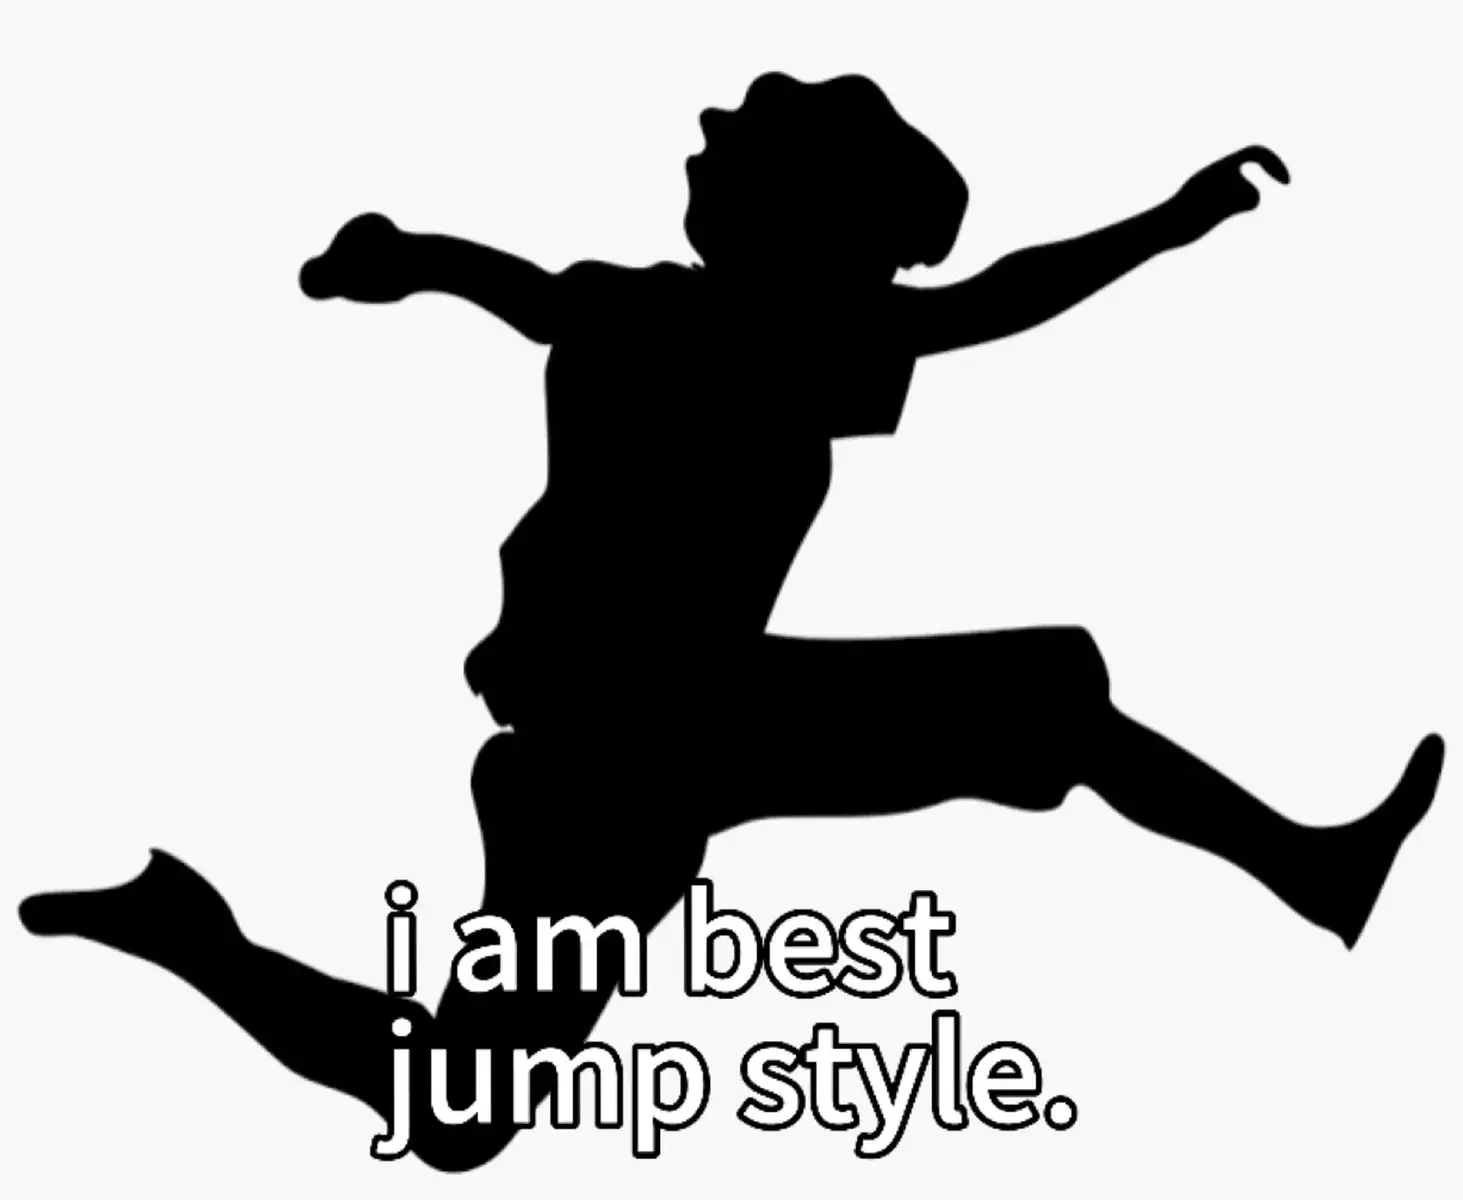 best jump is bunny hop.👑 #valve #steam #csgo #cs #cs2 #bunnyhop #jumpstyle #jump #best 